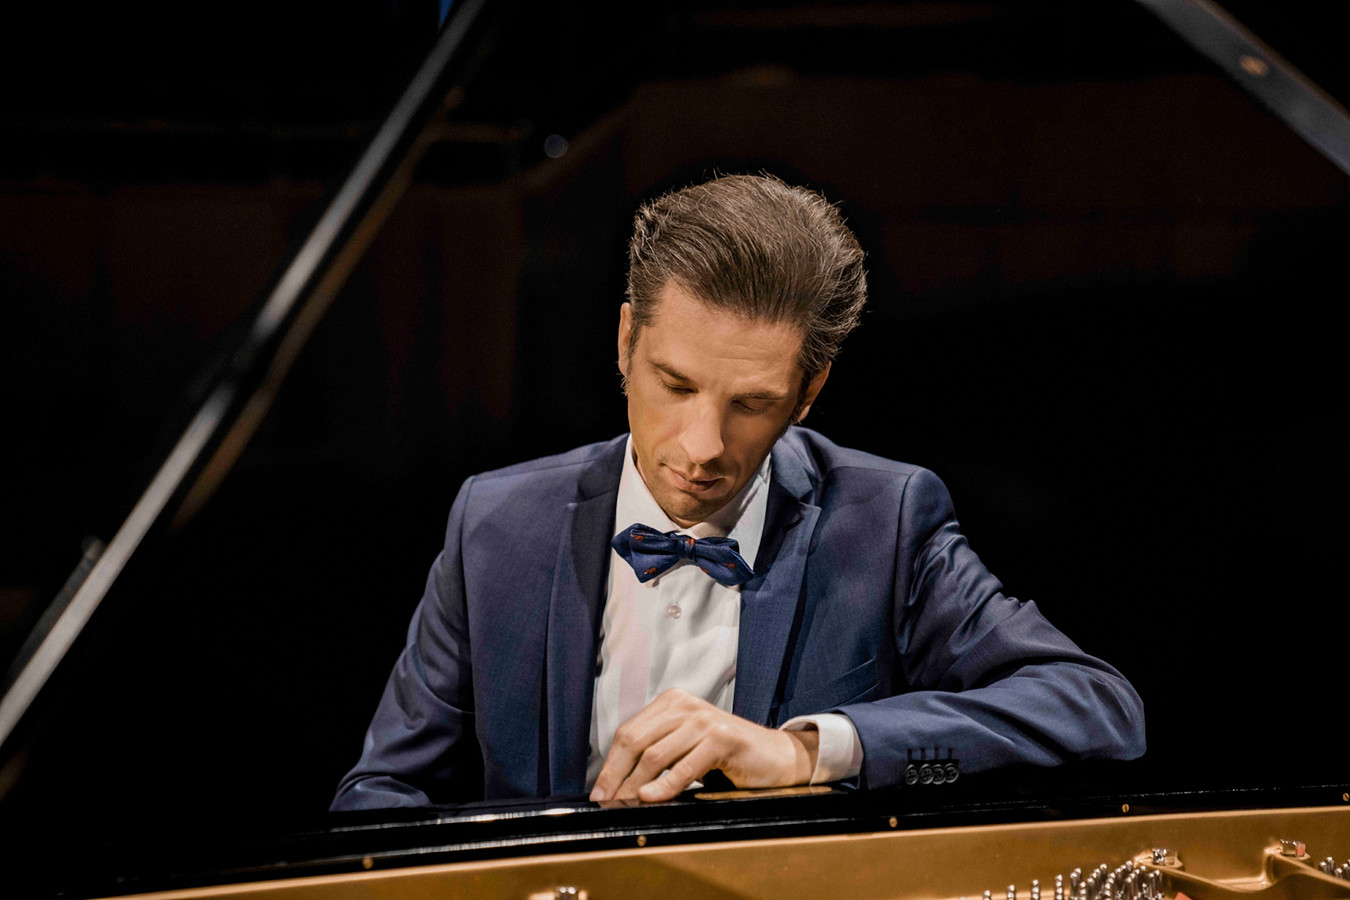 De Duitse pianovirtuoos Severin von Eckardstein komt dit weekend naar Middelburg.